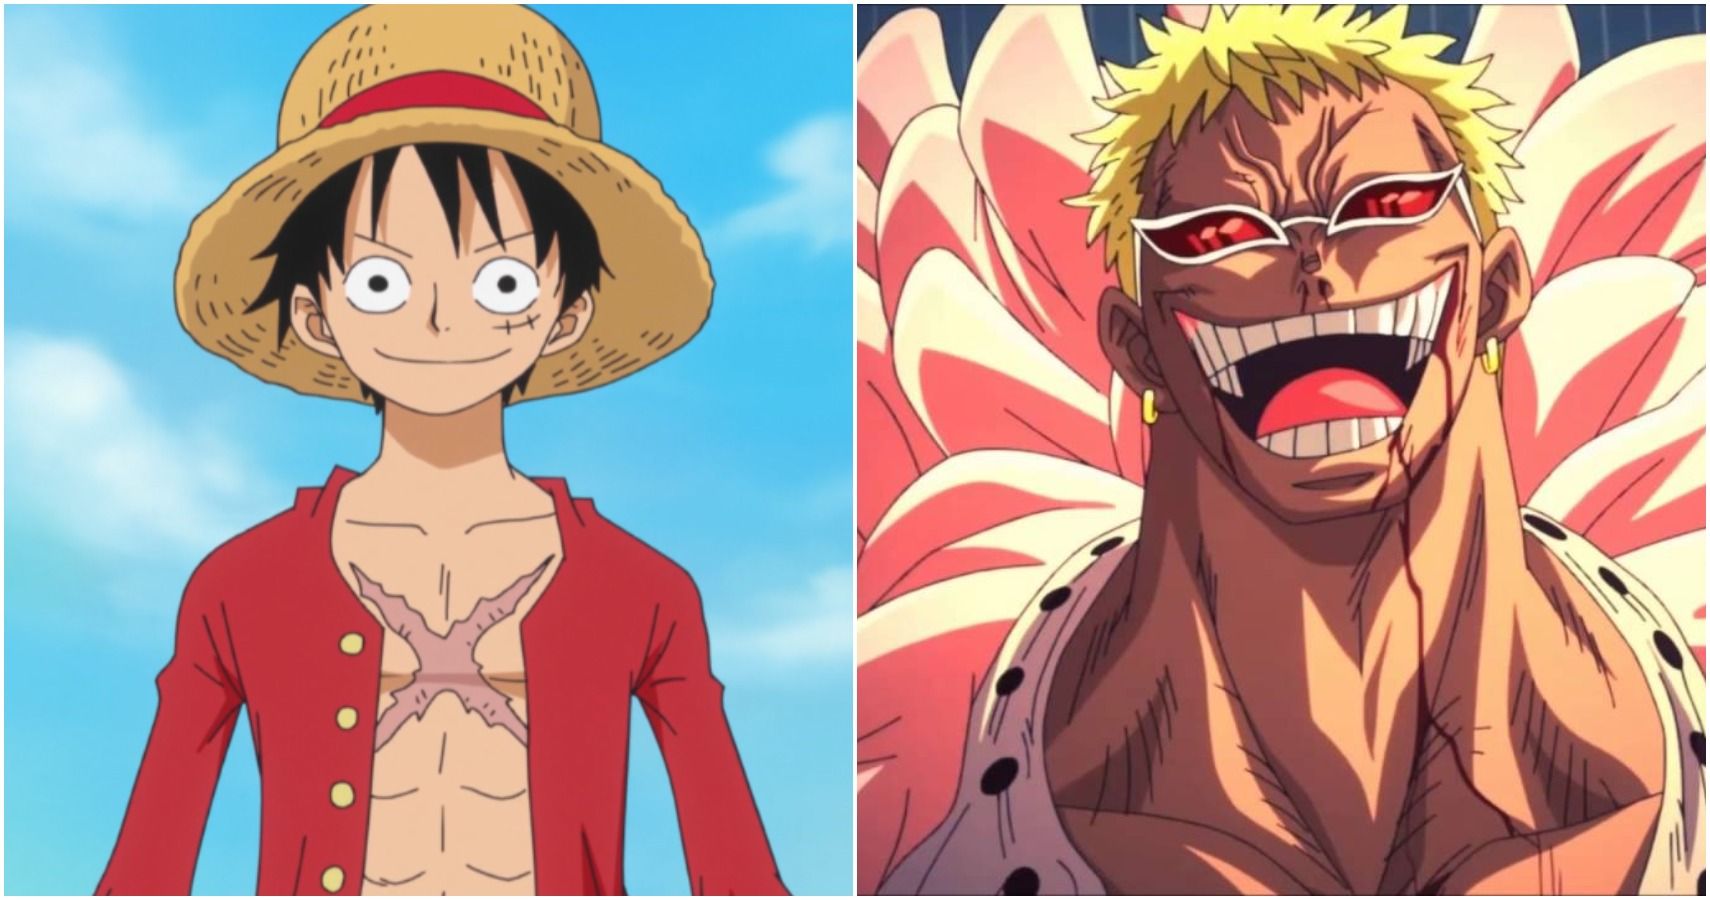 split image: Monkey D. Luffy and Donquixote Doflamingo from One Piece